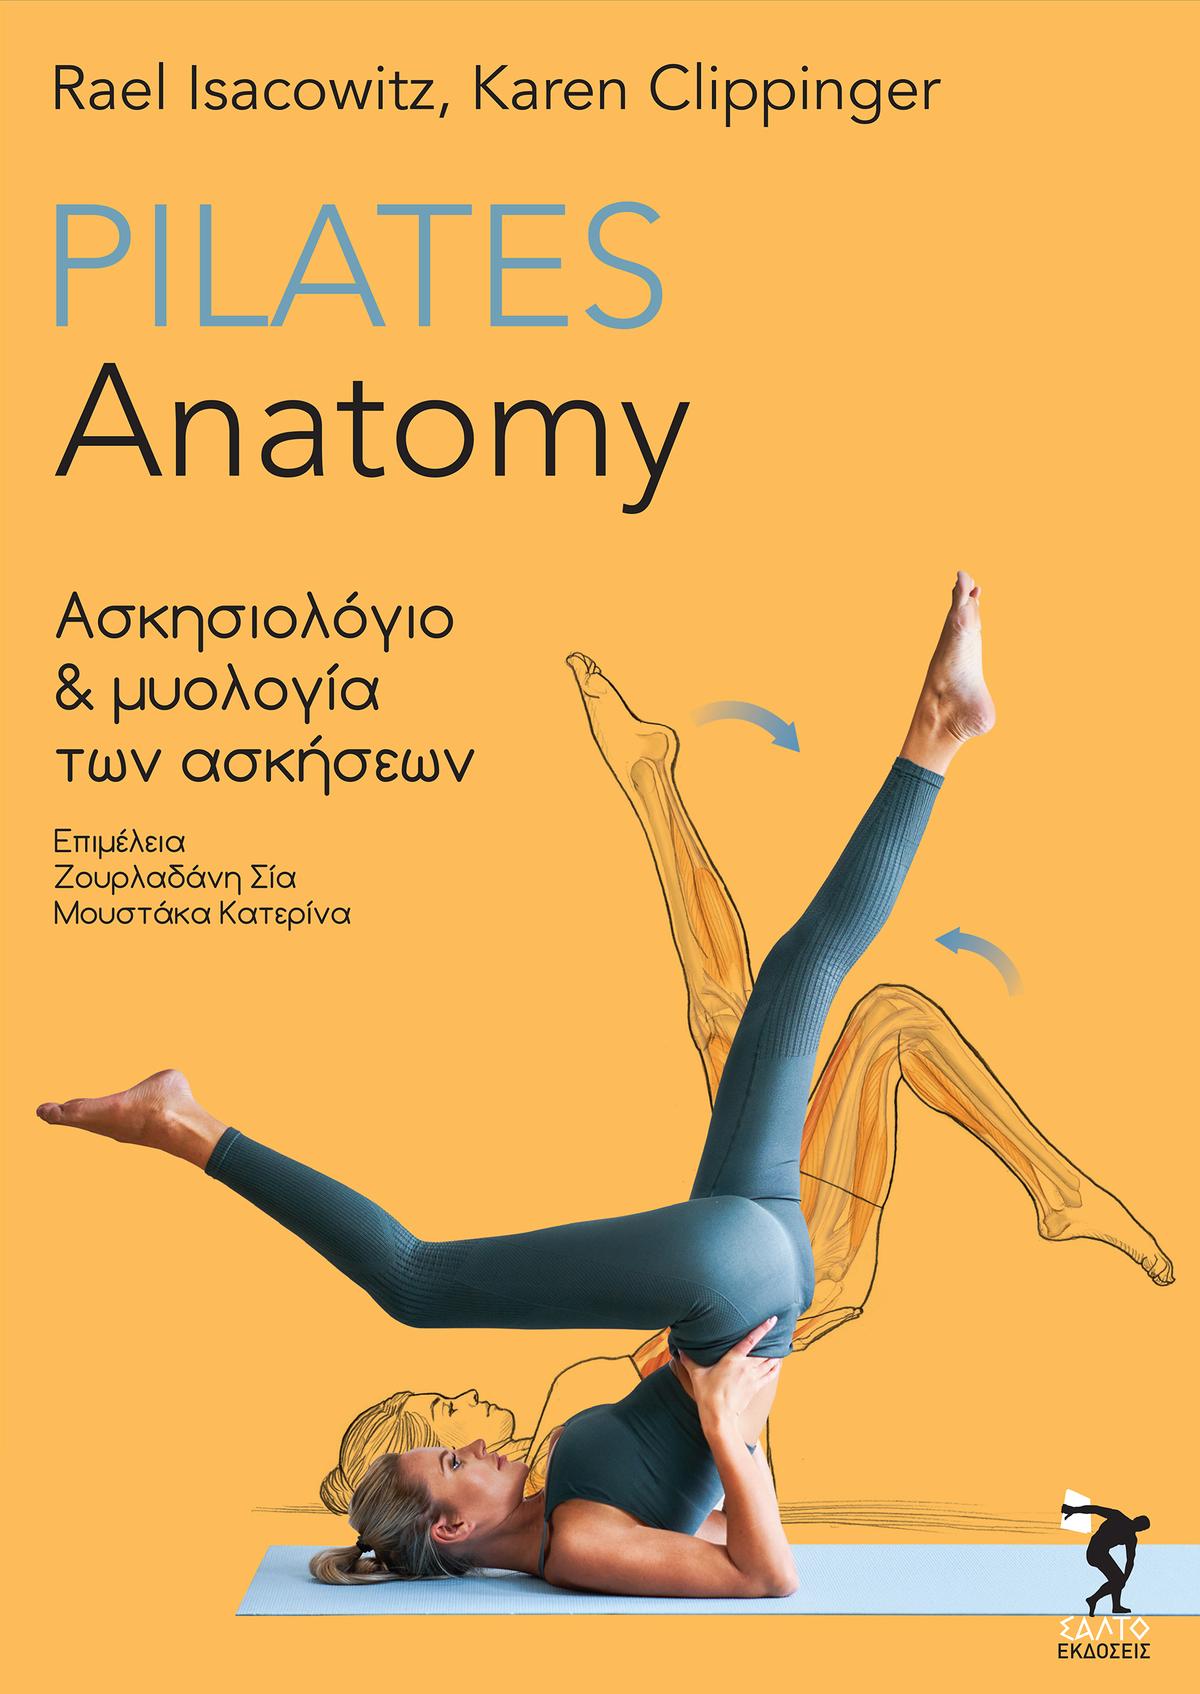 Pilates anatomy: Ασκησιολόγιο και μυολογία των ασκήσεων